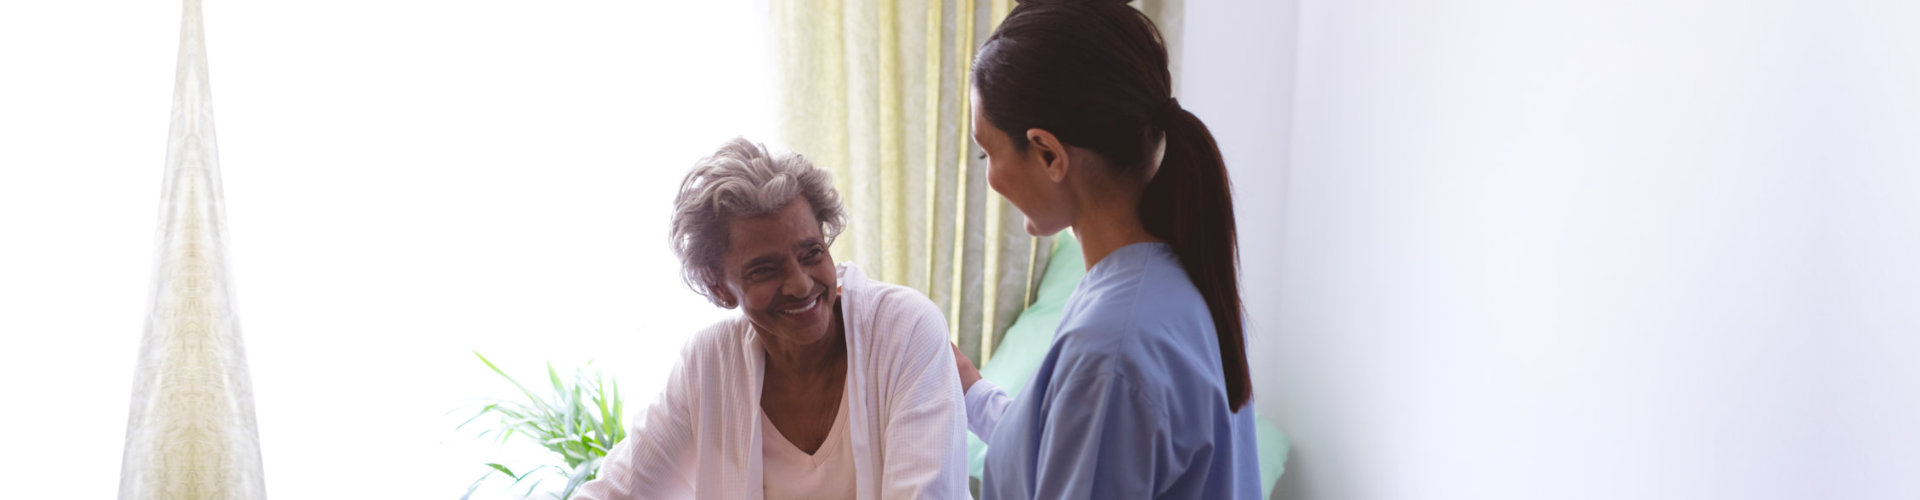 caregiver looking at a senior woman smiling